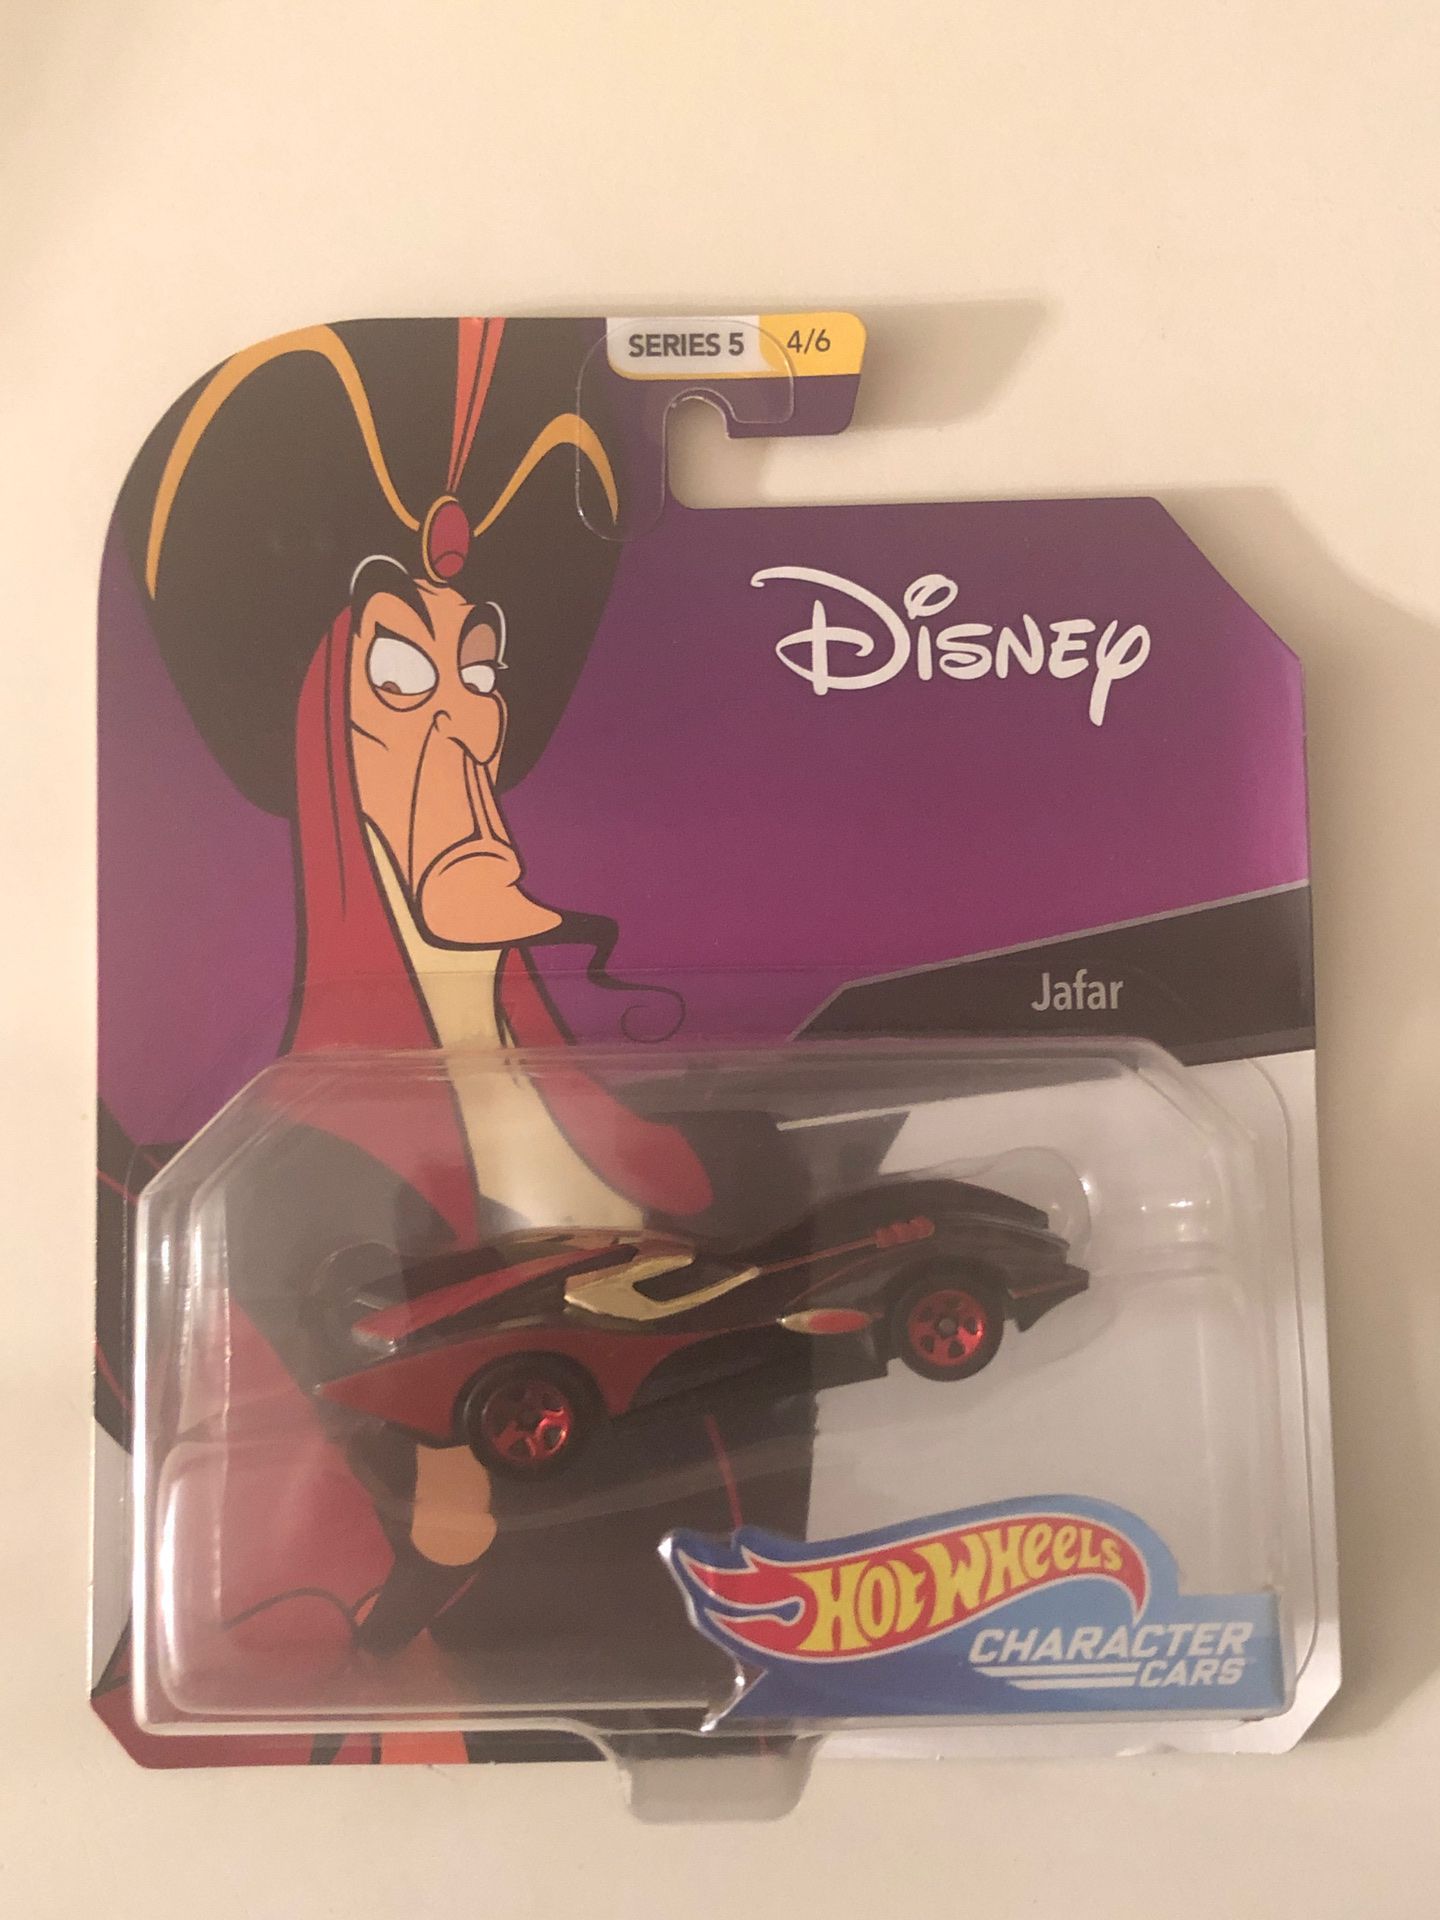 NEW Disney Villian Hotwheels (Character Cars) JAFAR from Aladdin